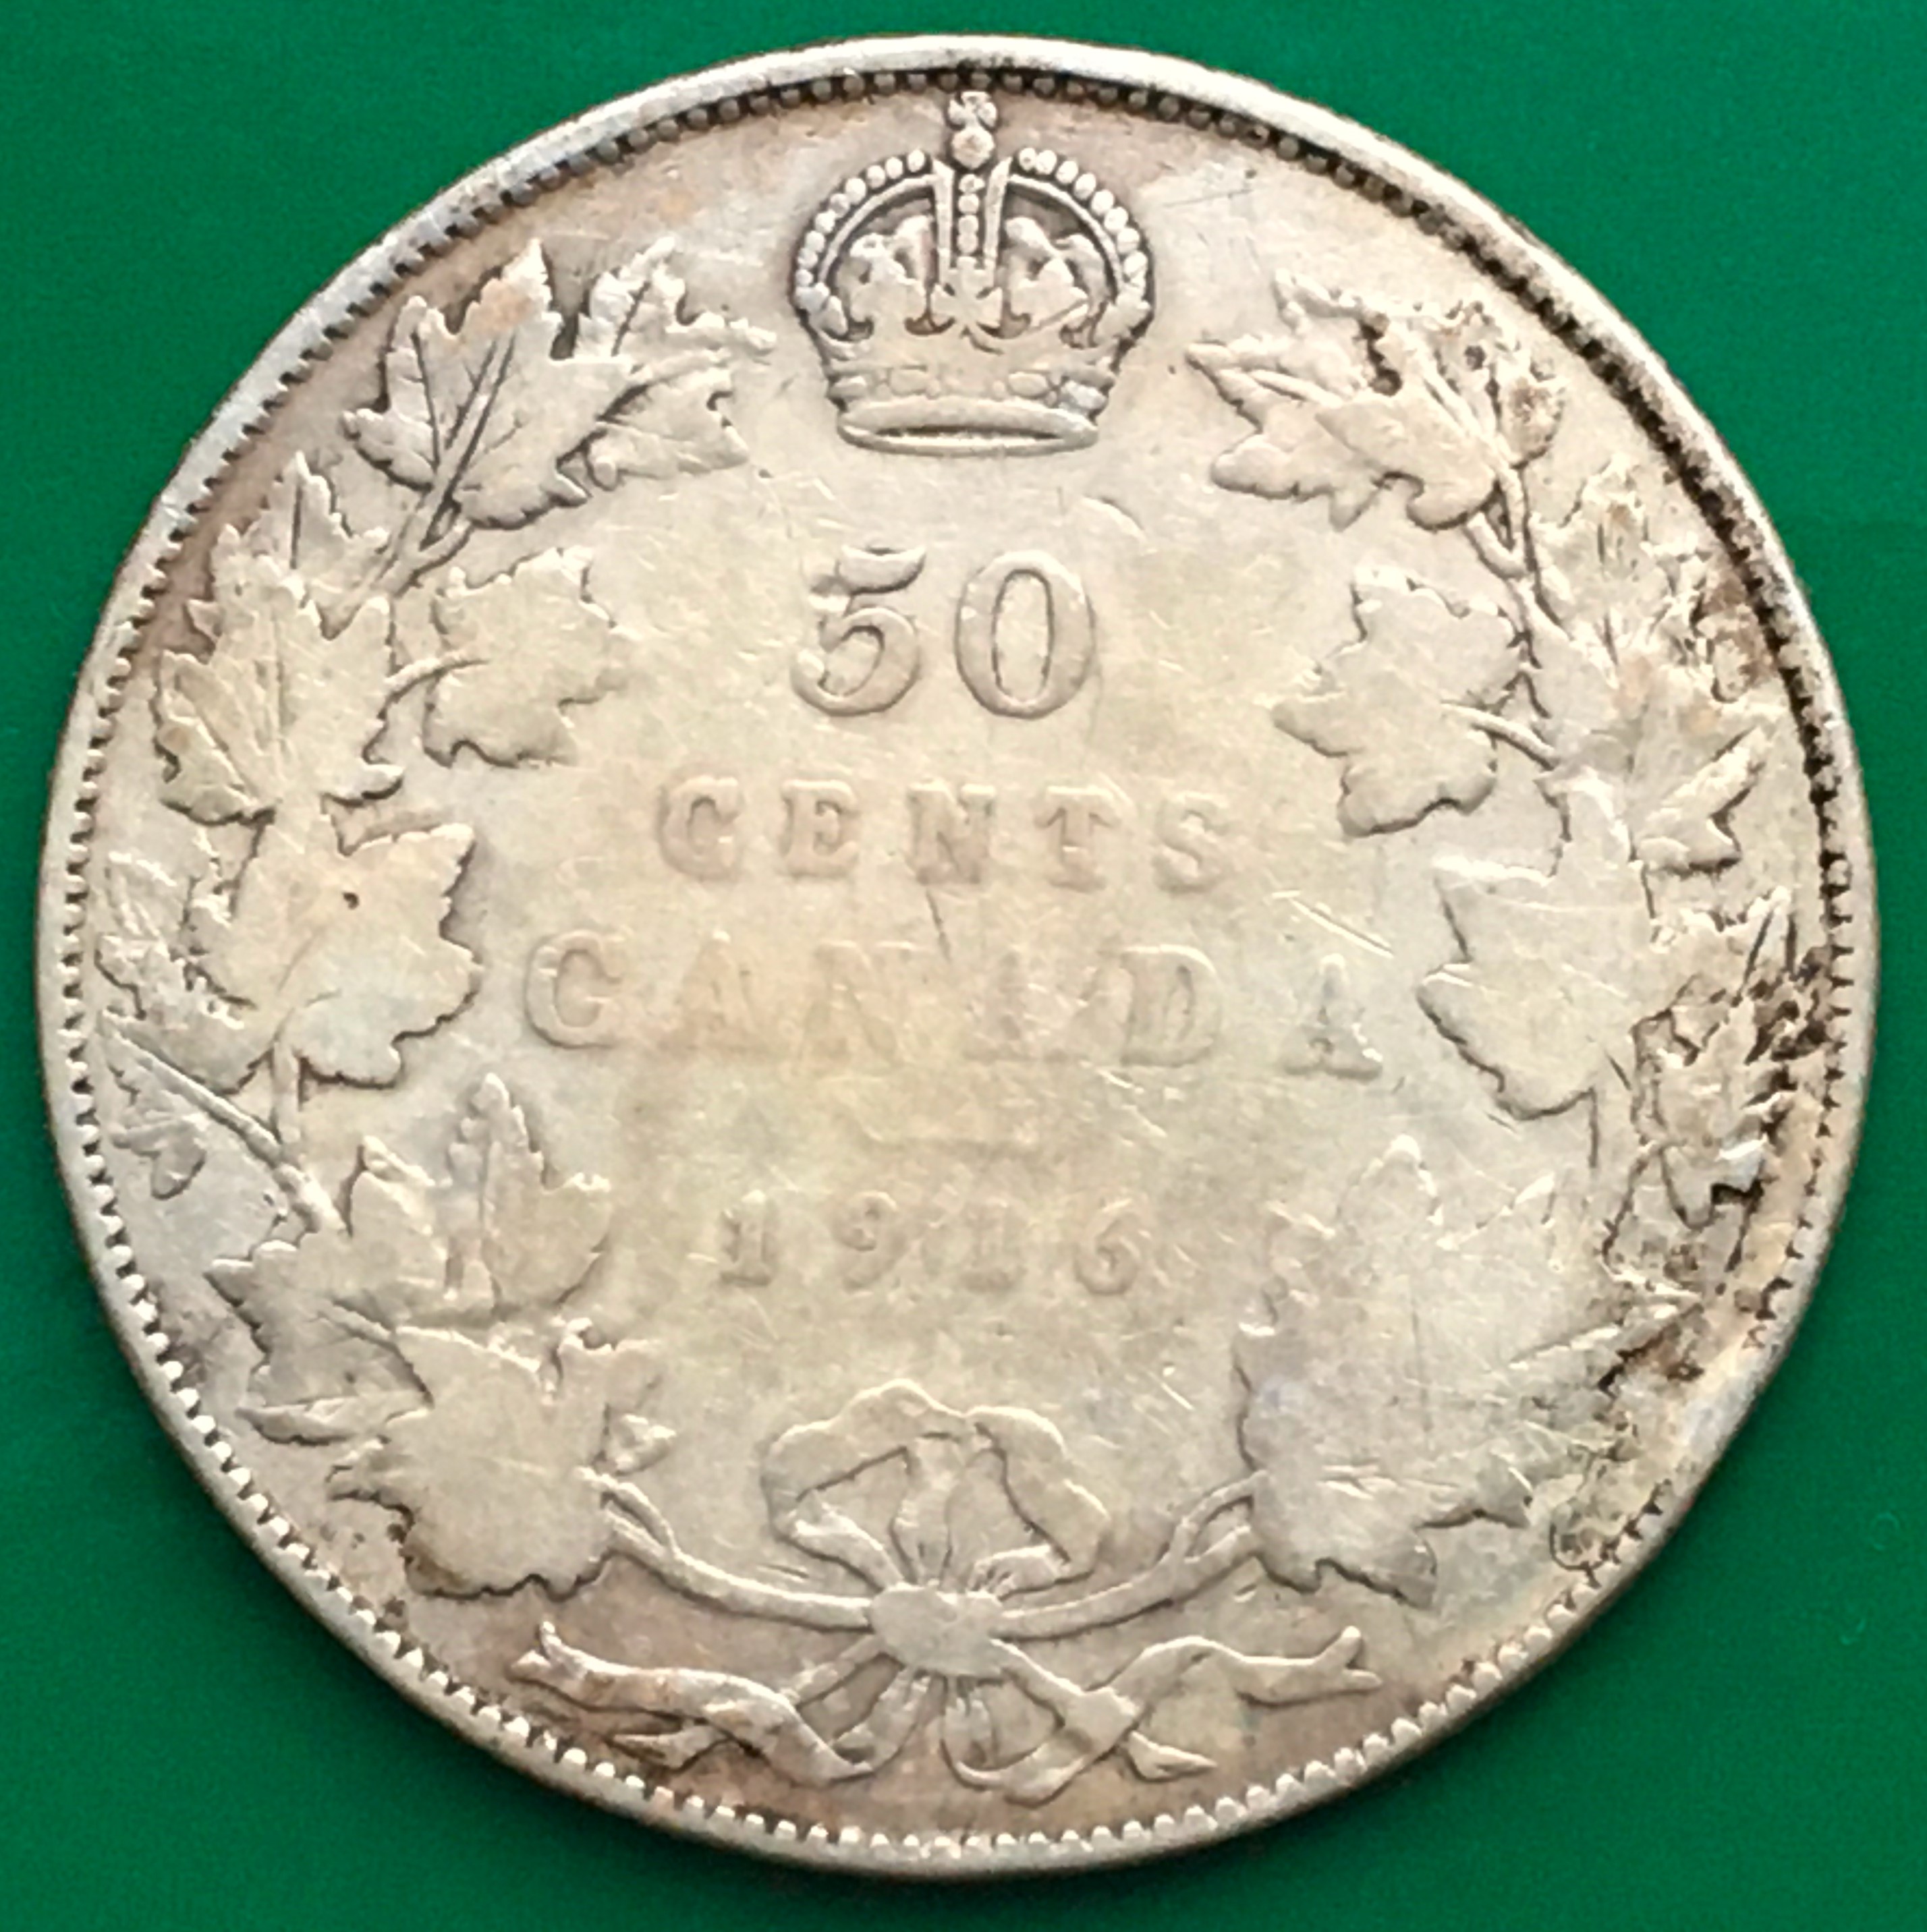 50 cents 1916.JPG